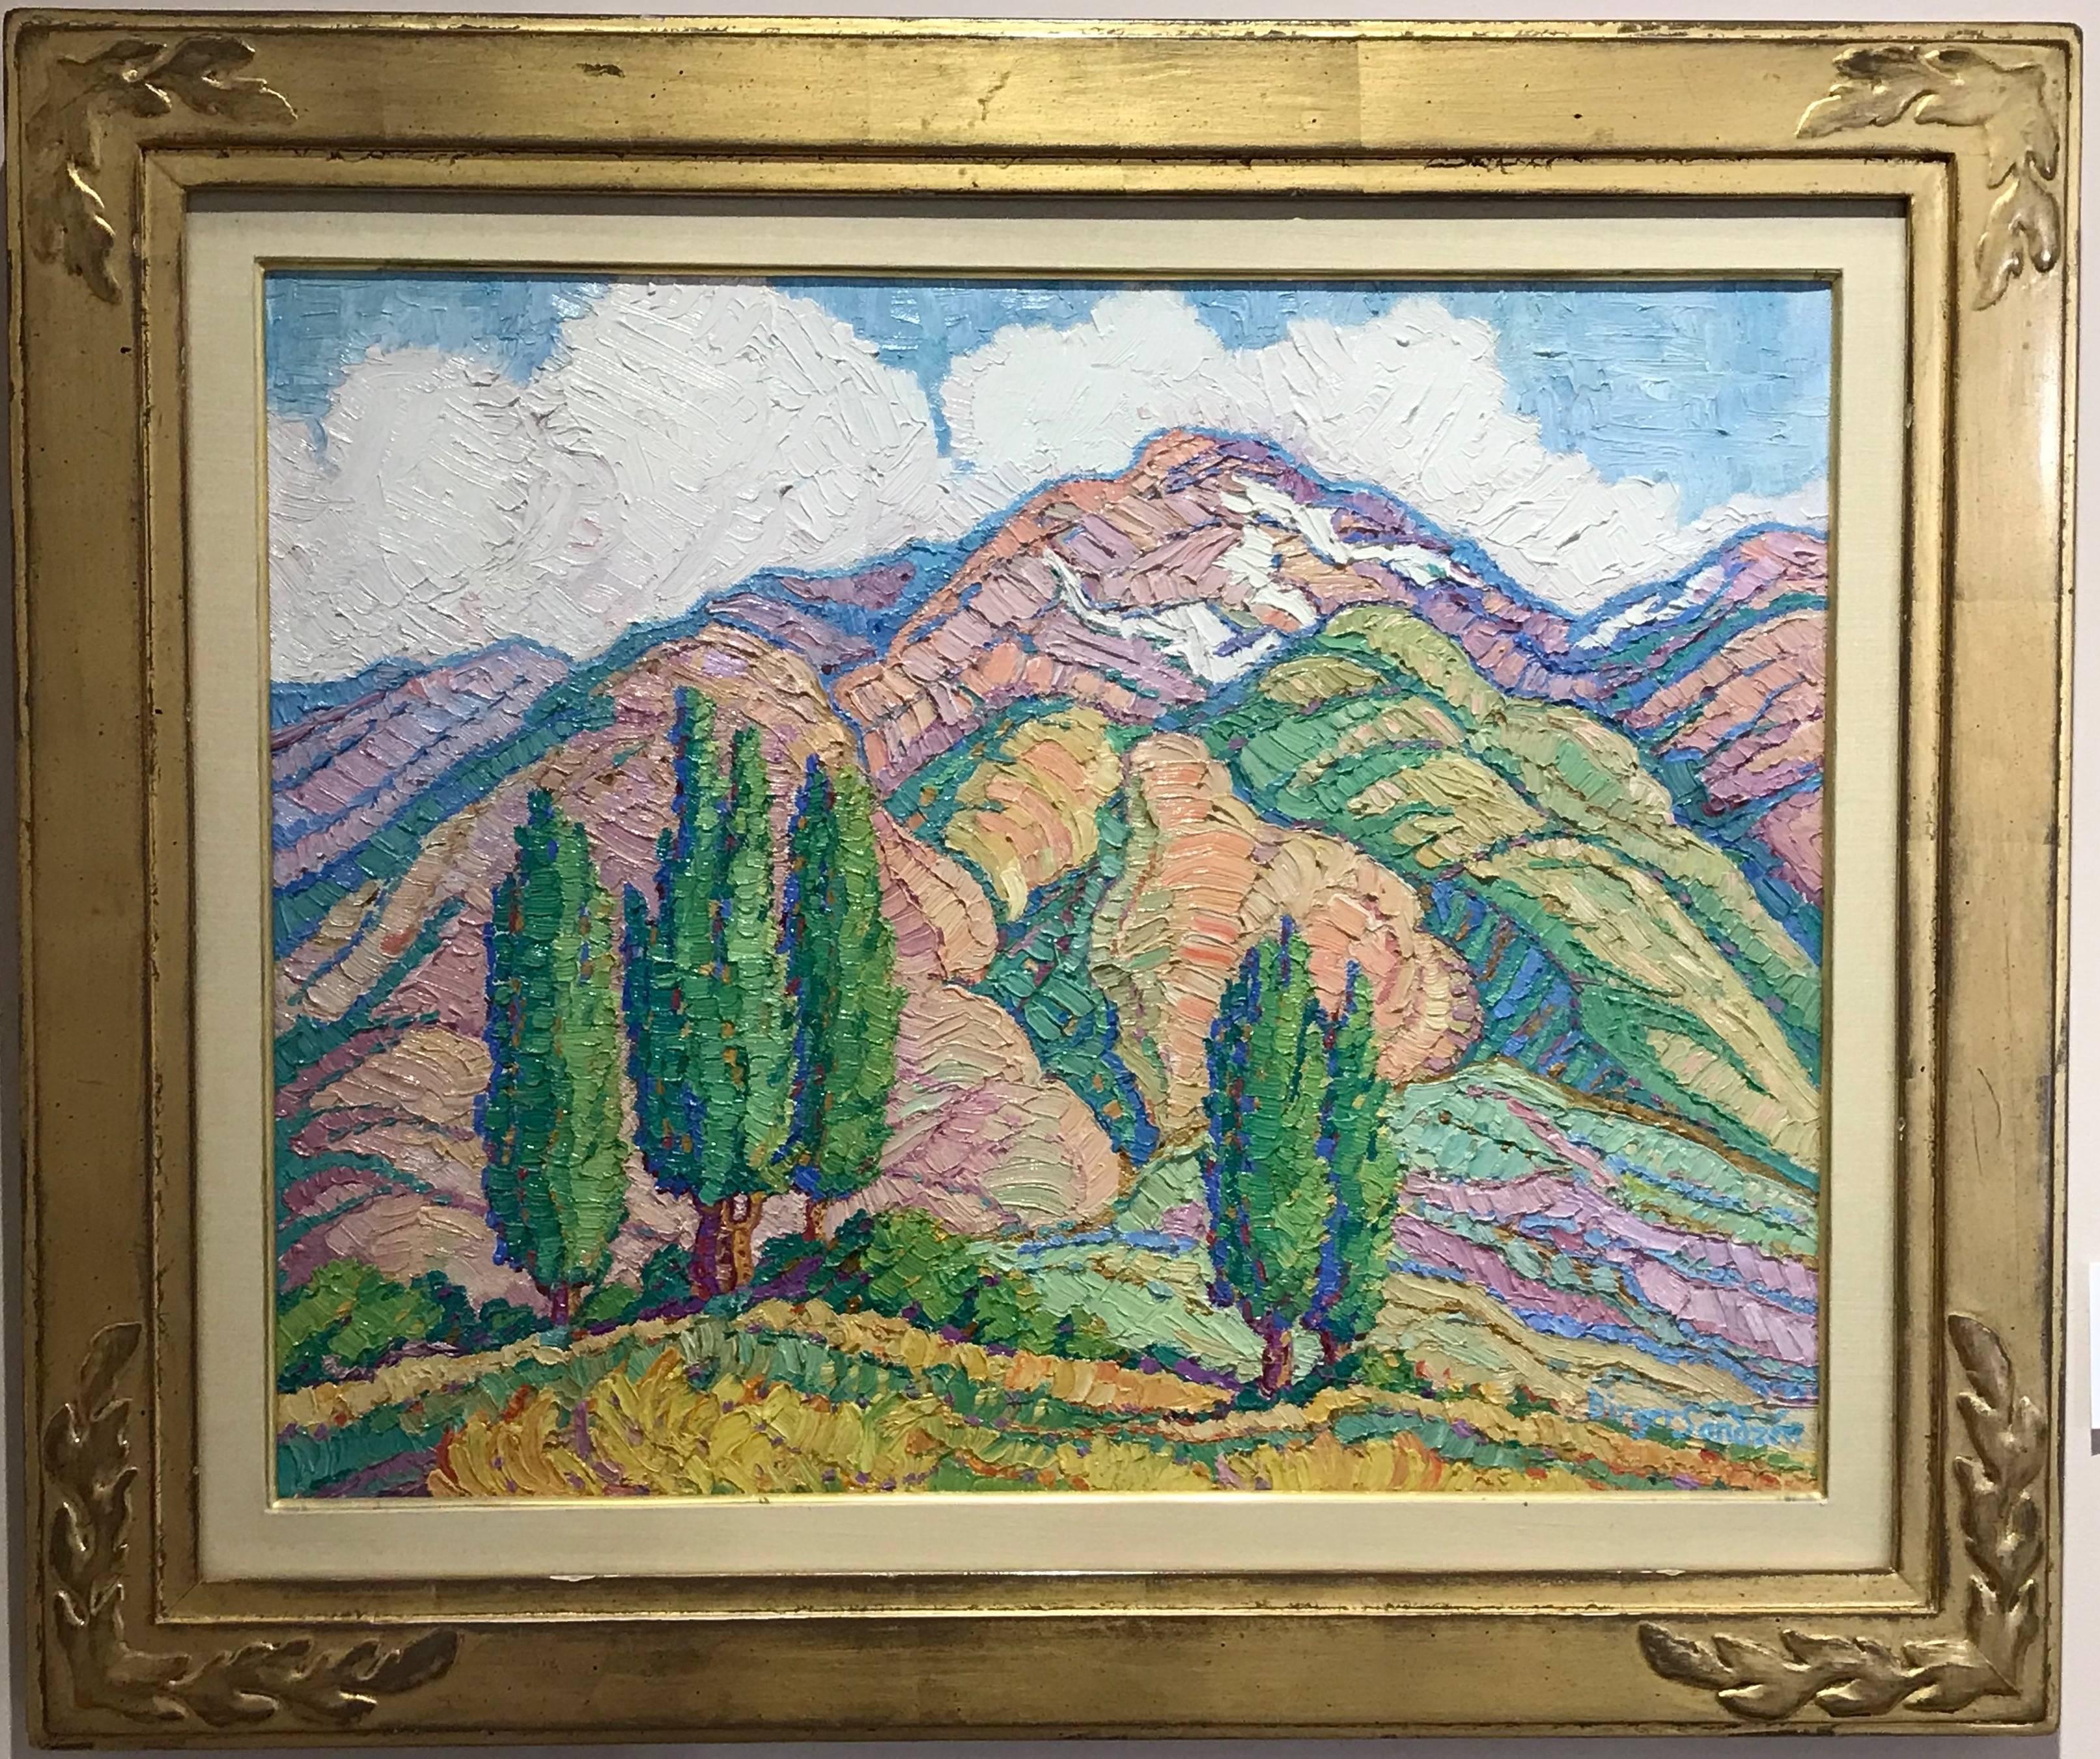 Sven Birger Sandzen Landscape Painting - Poplars and Mountains, gold frame, landscape, unique oil on canvas, Taos Society